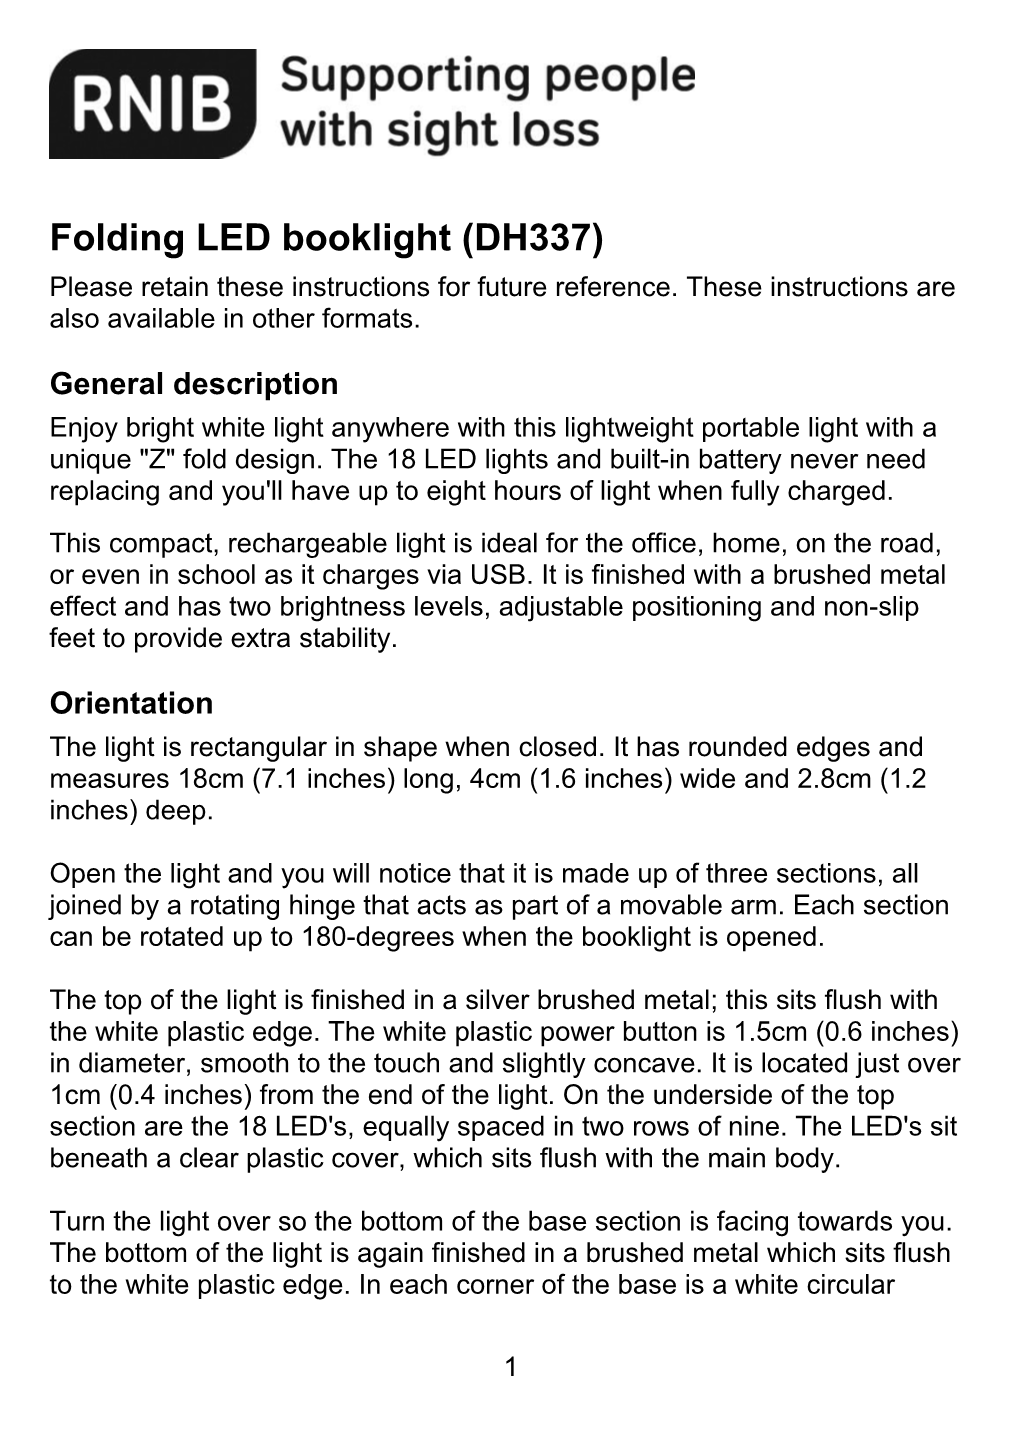 Folding LED Booklight (DH337)